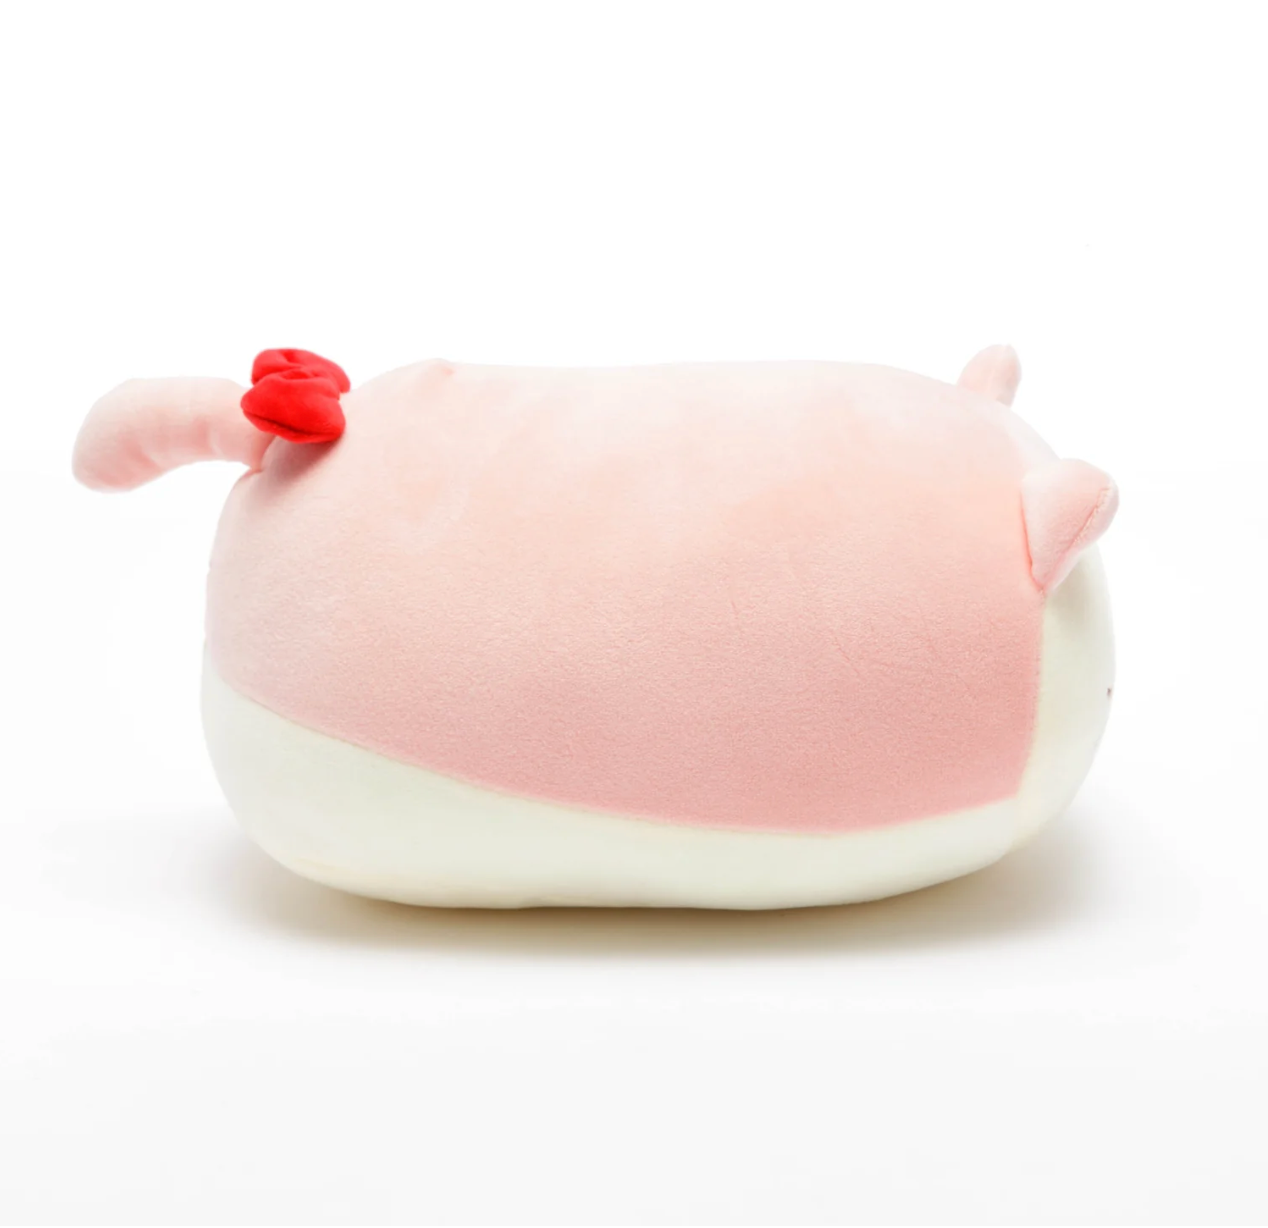 Anirollz 10" Kittiroll Ultra Soft Pillow Squishy Rest Warm Support Plush Comfort Stuffed Animal